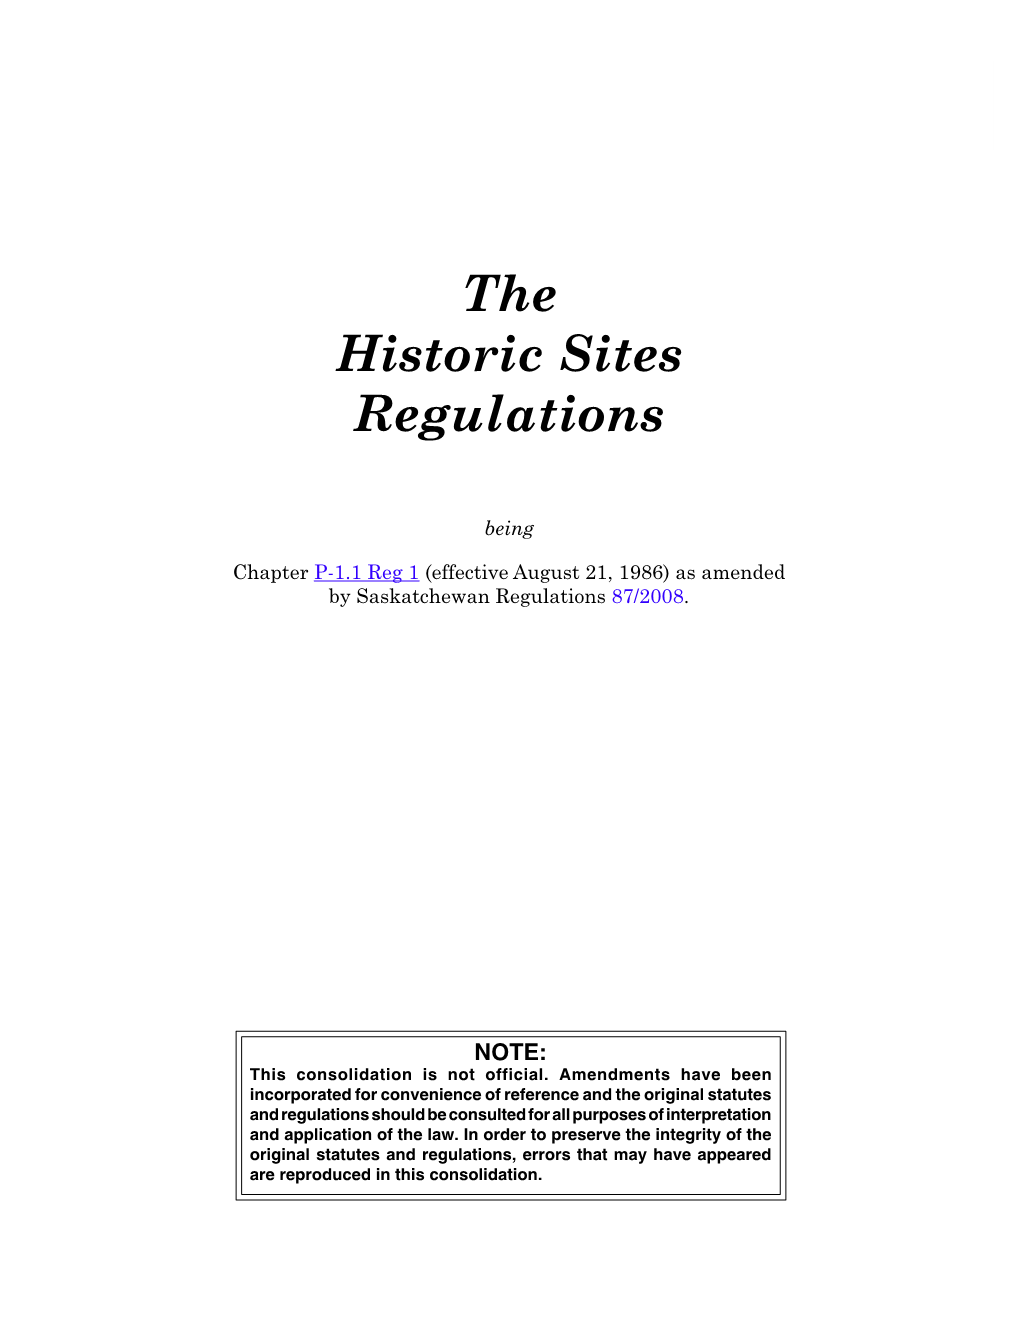 The Historic Sites Regulations